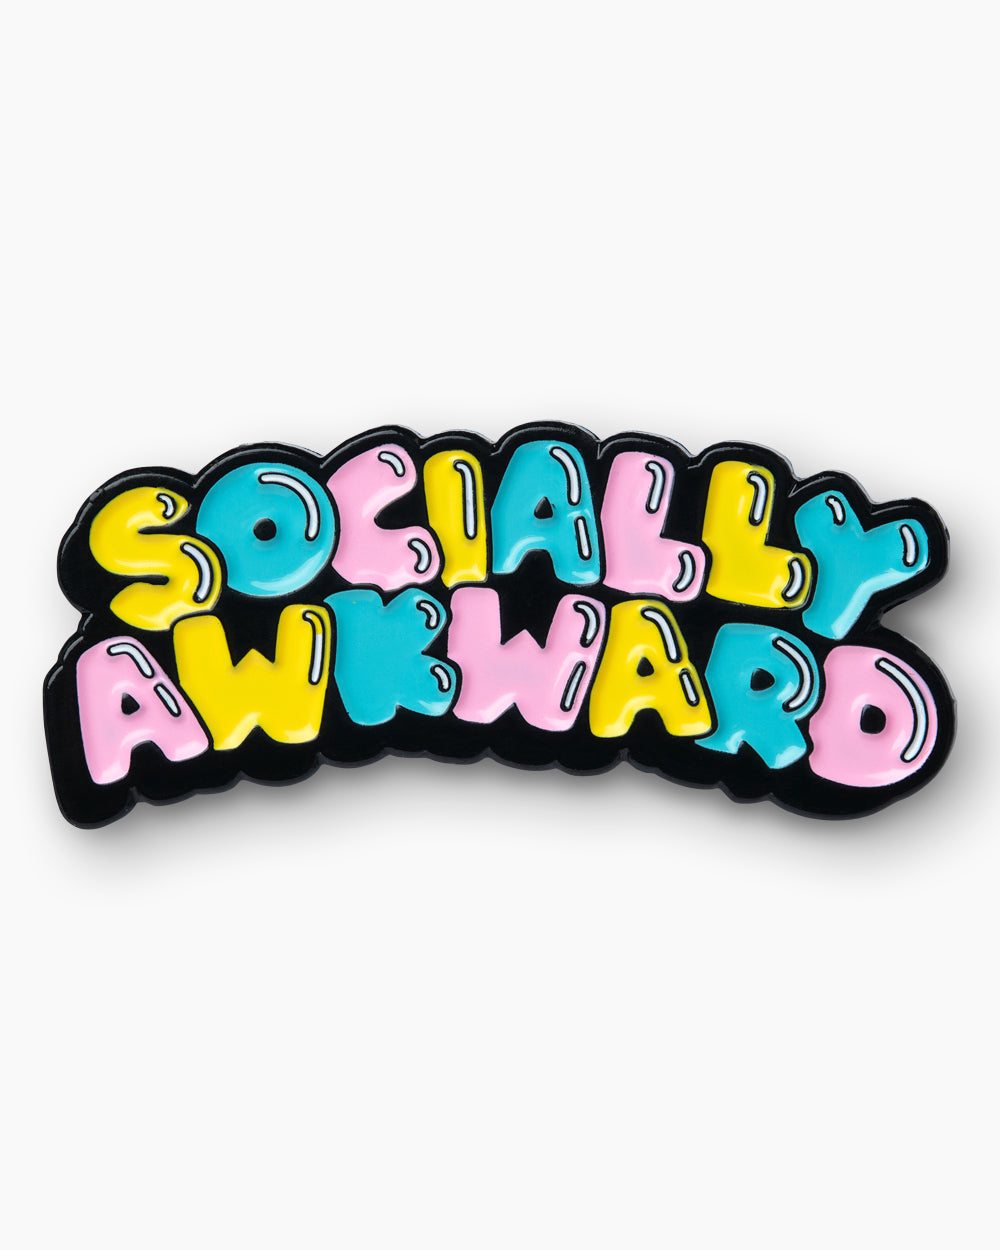 Socially Awkward Enamel Pin | Threadheads Exclusive